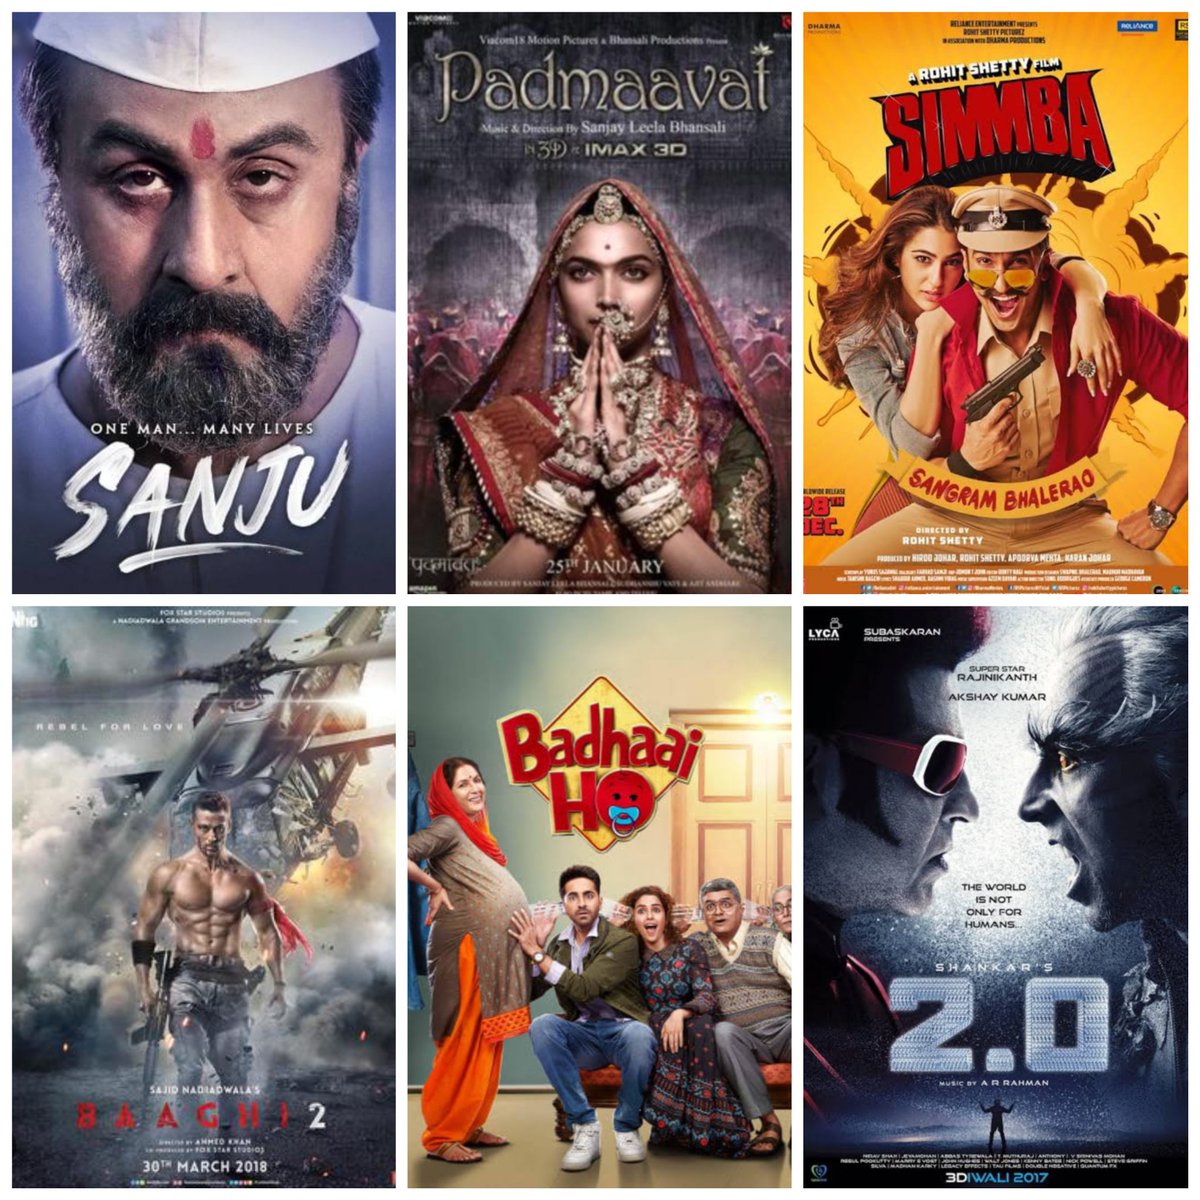 Most running film of 2018.
Which of these is your favorite film?
#Sanju
#Padmaavat
#Simmba
#Baaghi2
#BadhaaiHo
#Robot2.0

#RanbirKapoor #deepikapadukone #RanveerSing #SaraAliKhan #TigerShroff #AyushmannKhurrana #AkshayKumar #Rajinikanth𓃵 #Trending #viral #movie #TJMM #Bollywood